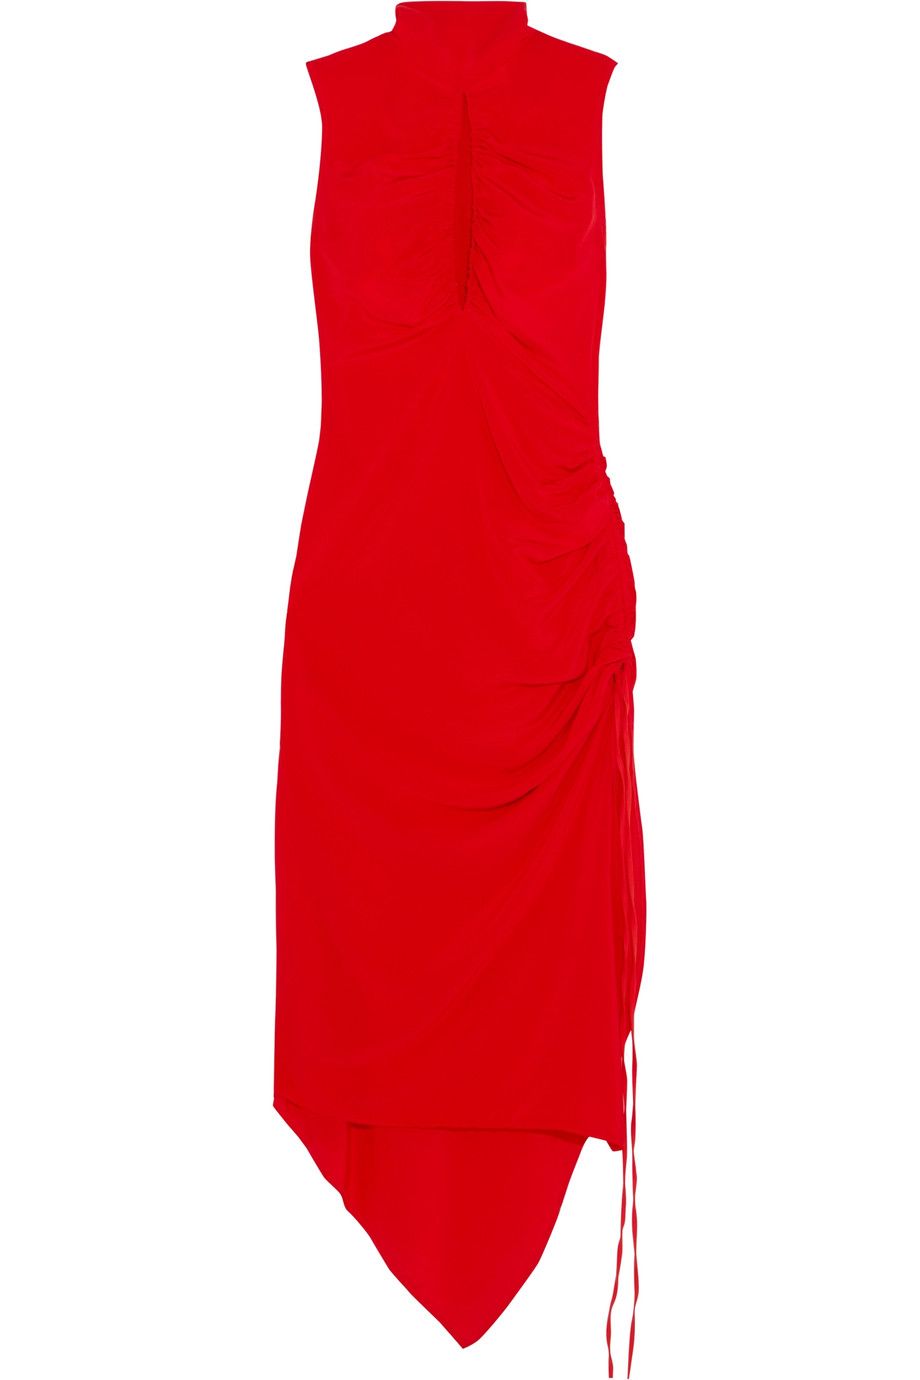 Dress, Clothing, Cocktail dress, Day dress, Red, One-piece garment, Formal wear, Strapless dress, Sheath dress, 